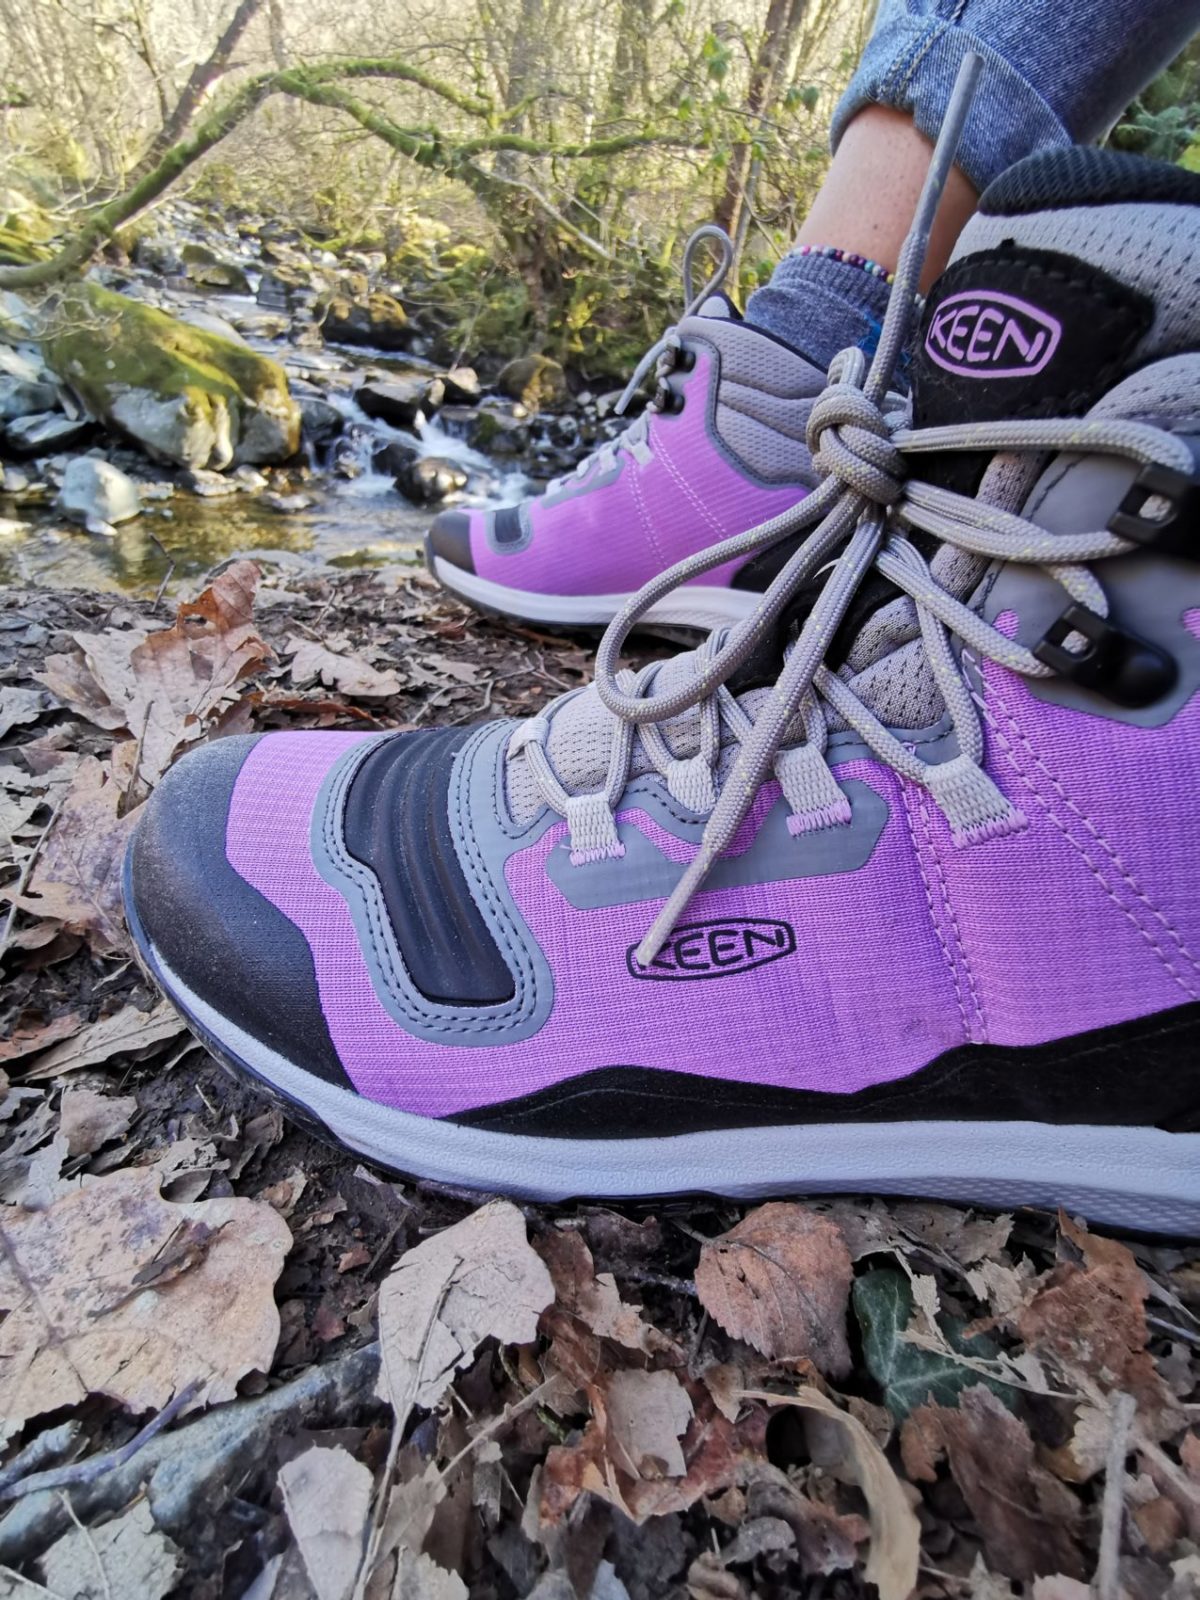 Keen Women's Tempo Flex Hiking Boots Review